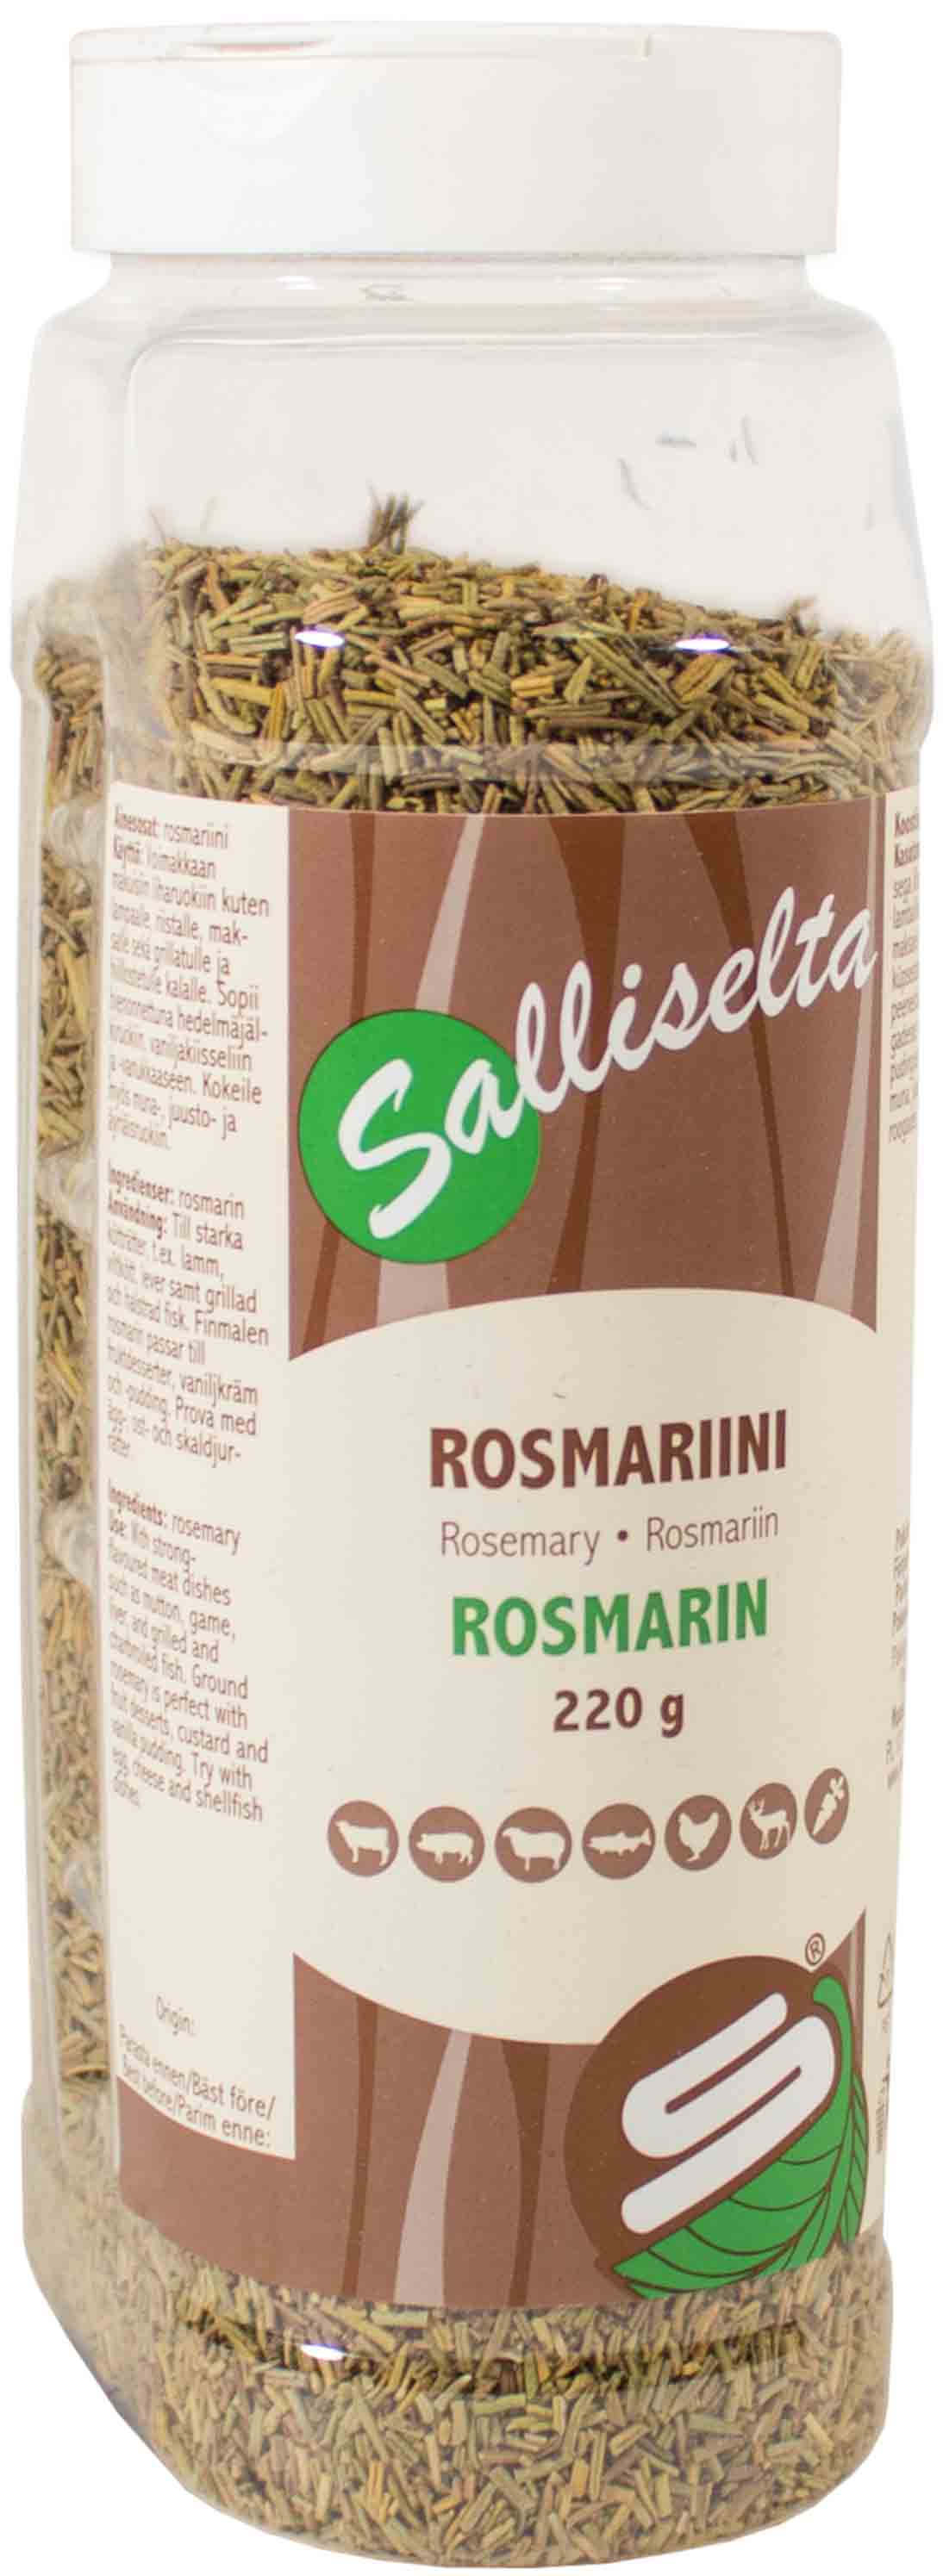 Rosmariini 220g